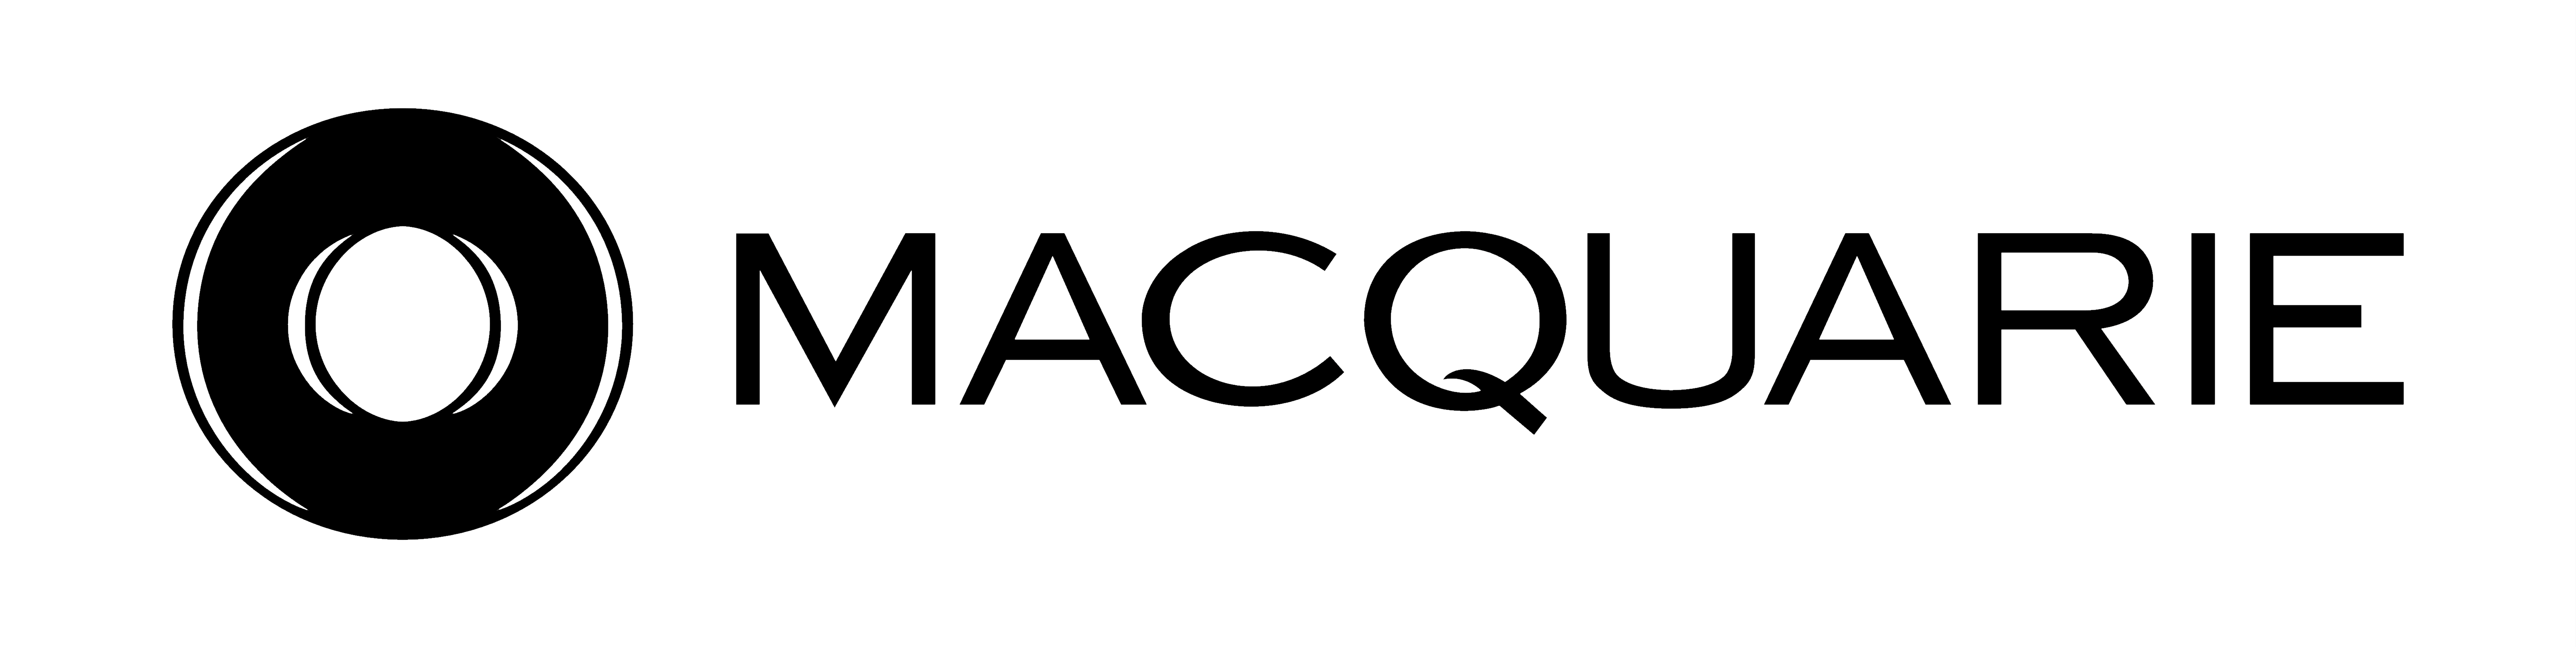 Macquarie Logo   Macquarie Logo Vector Png - Amideas Vector, Transparent background PNG HD thumbnail